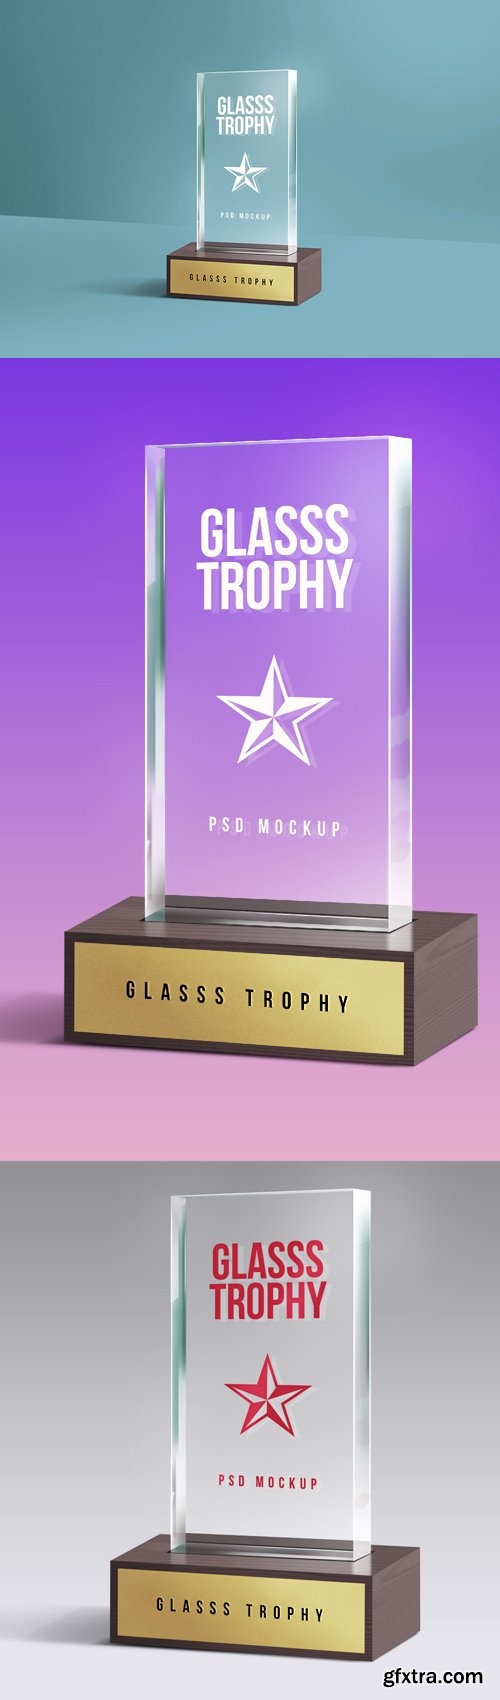 Glass Trophy PSD Mockup Template